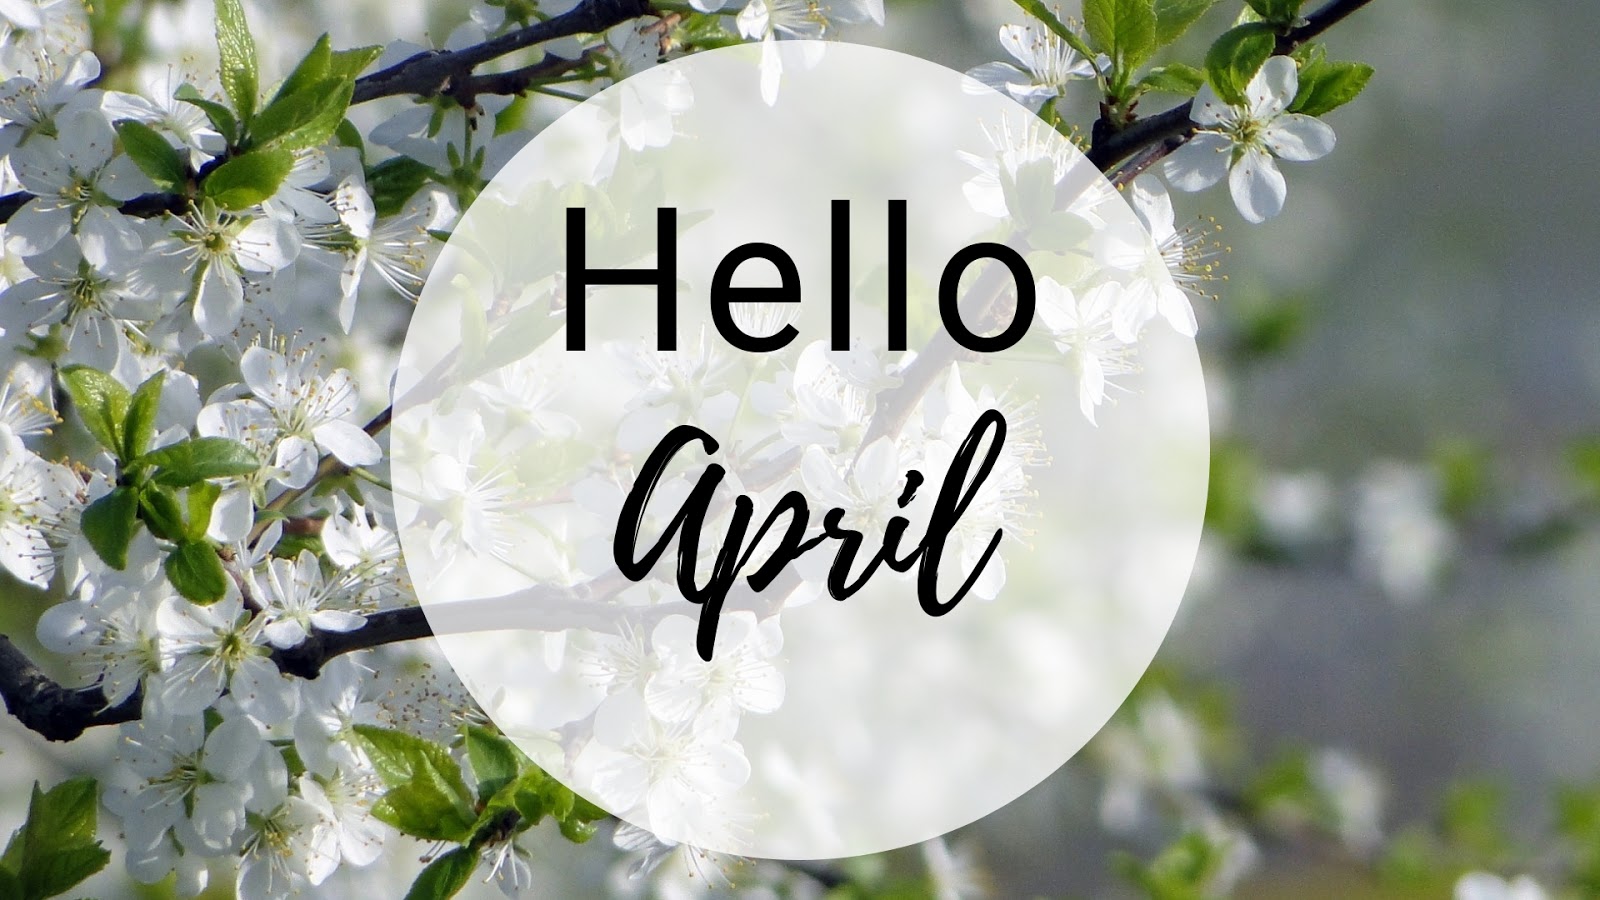 Hello open. Привет апрель. Hello март. Привет март надпись. Hello апрель картинки.